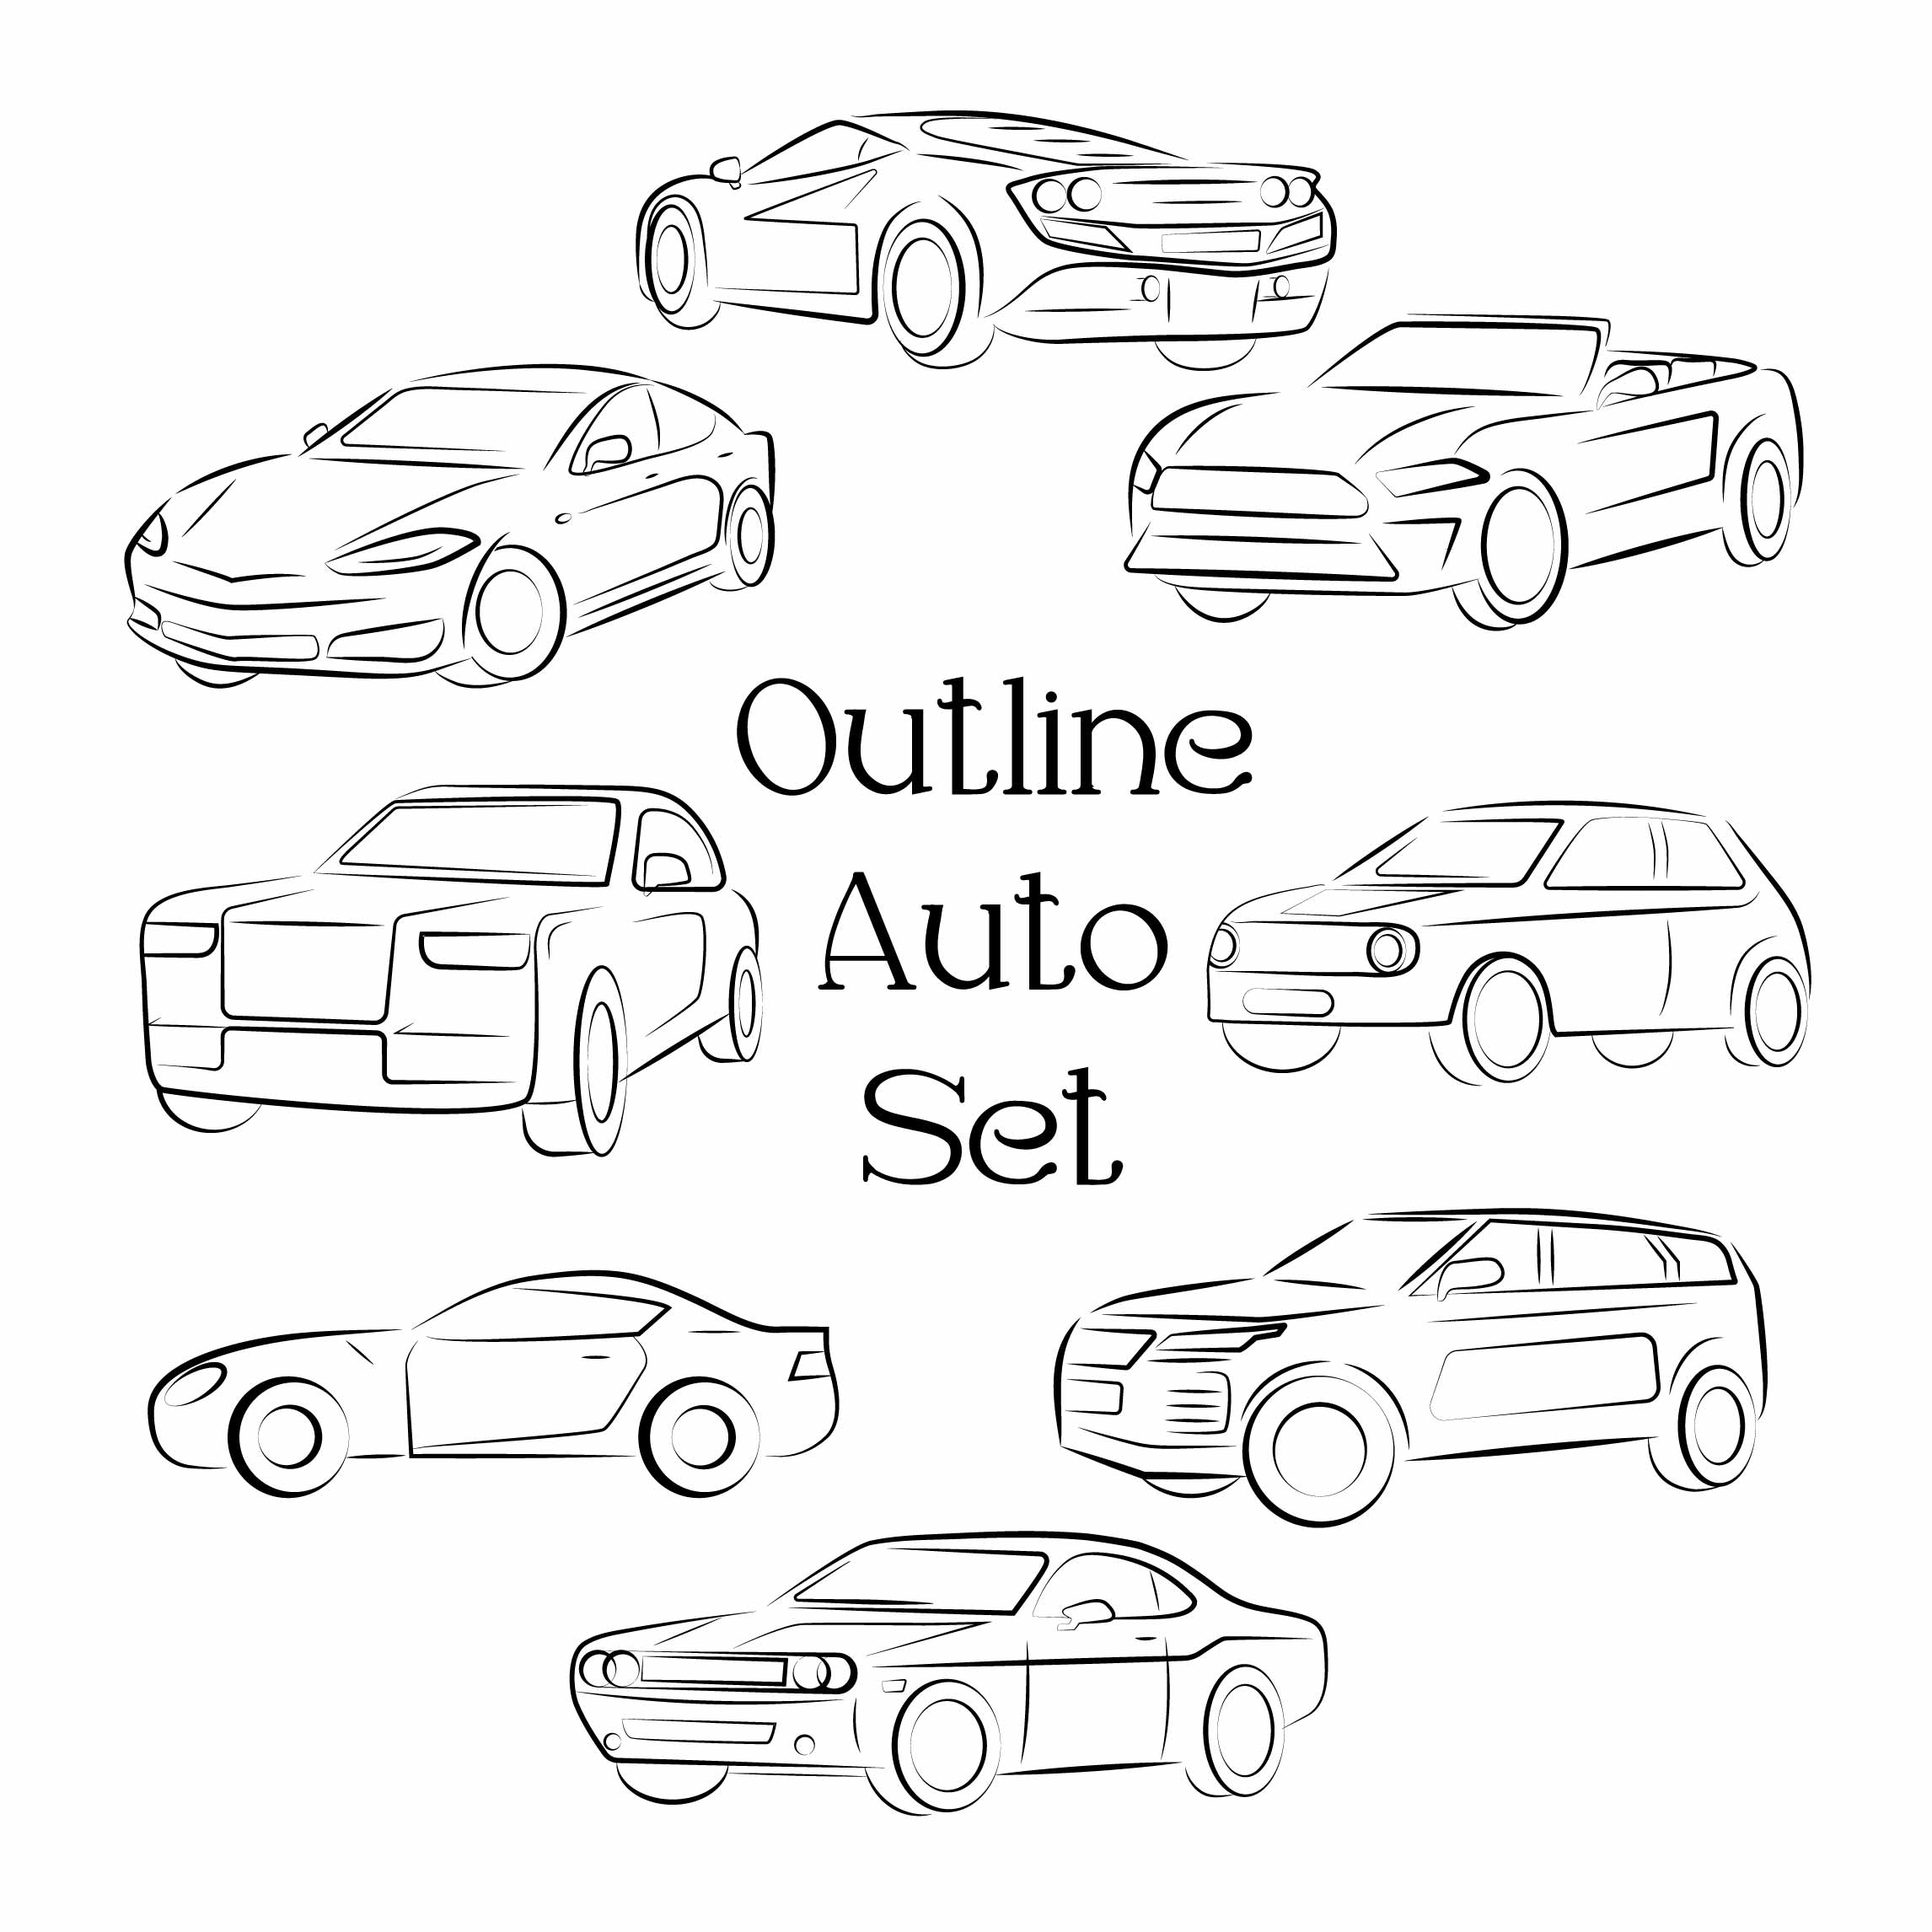 Outline Auto Set cover image.